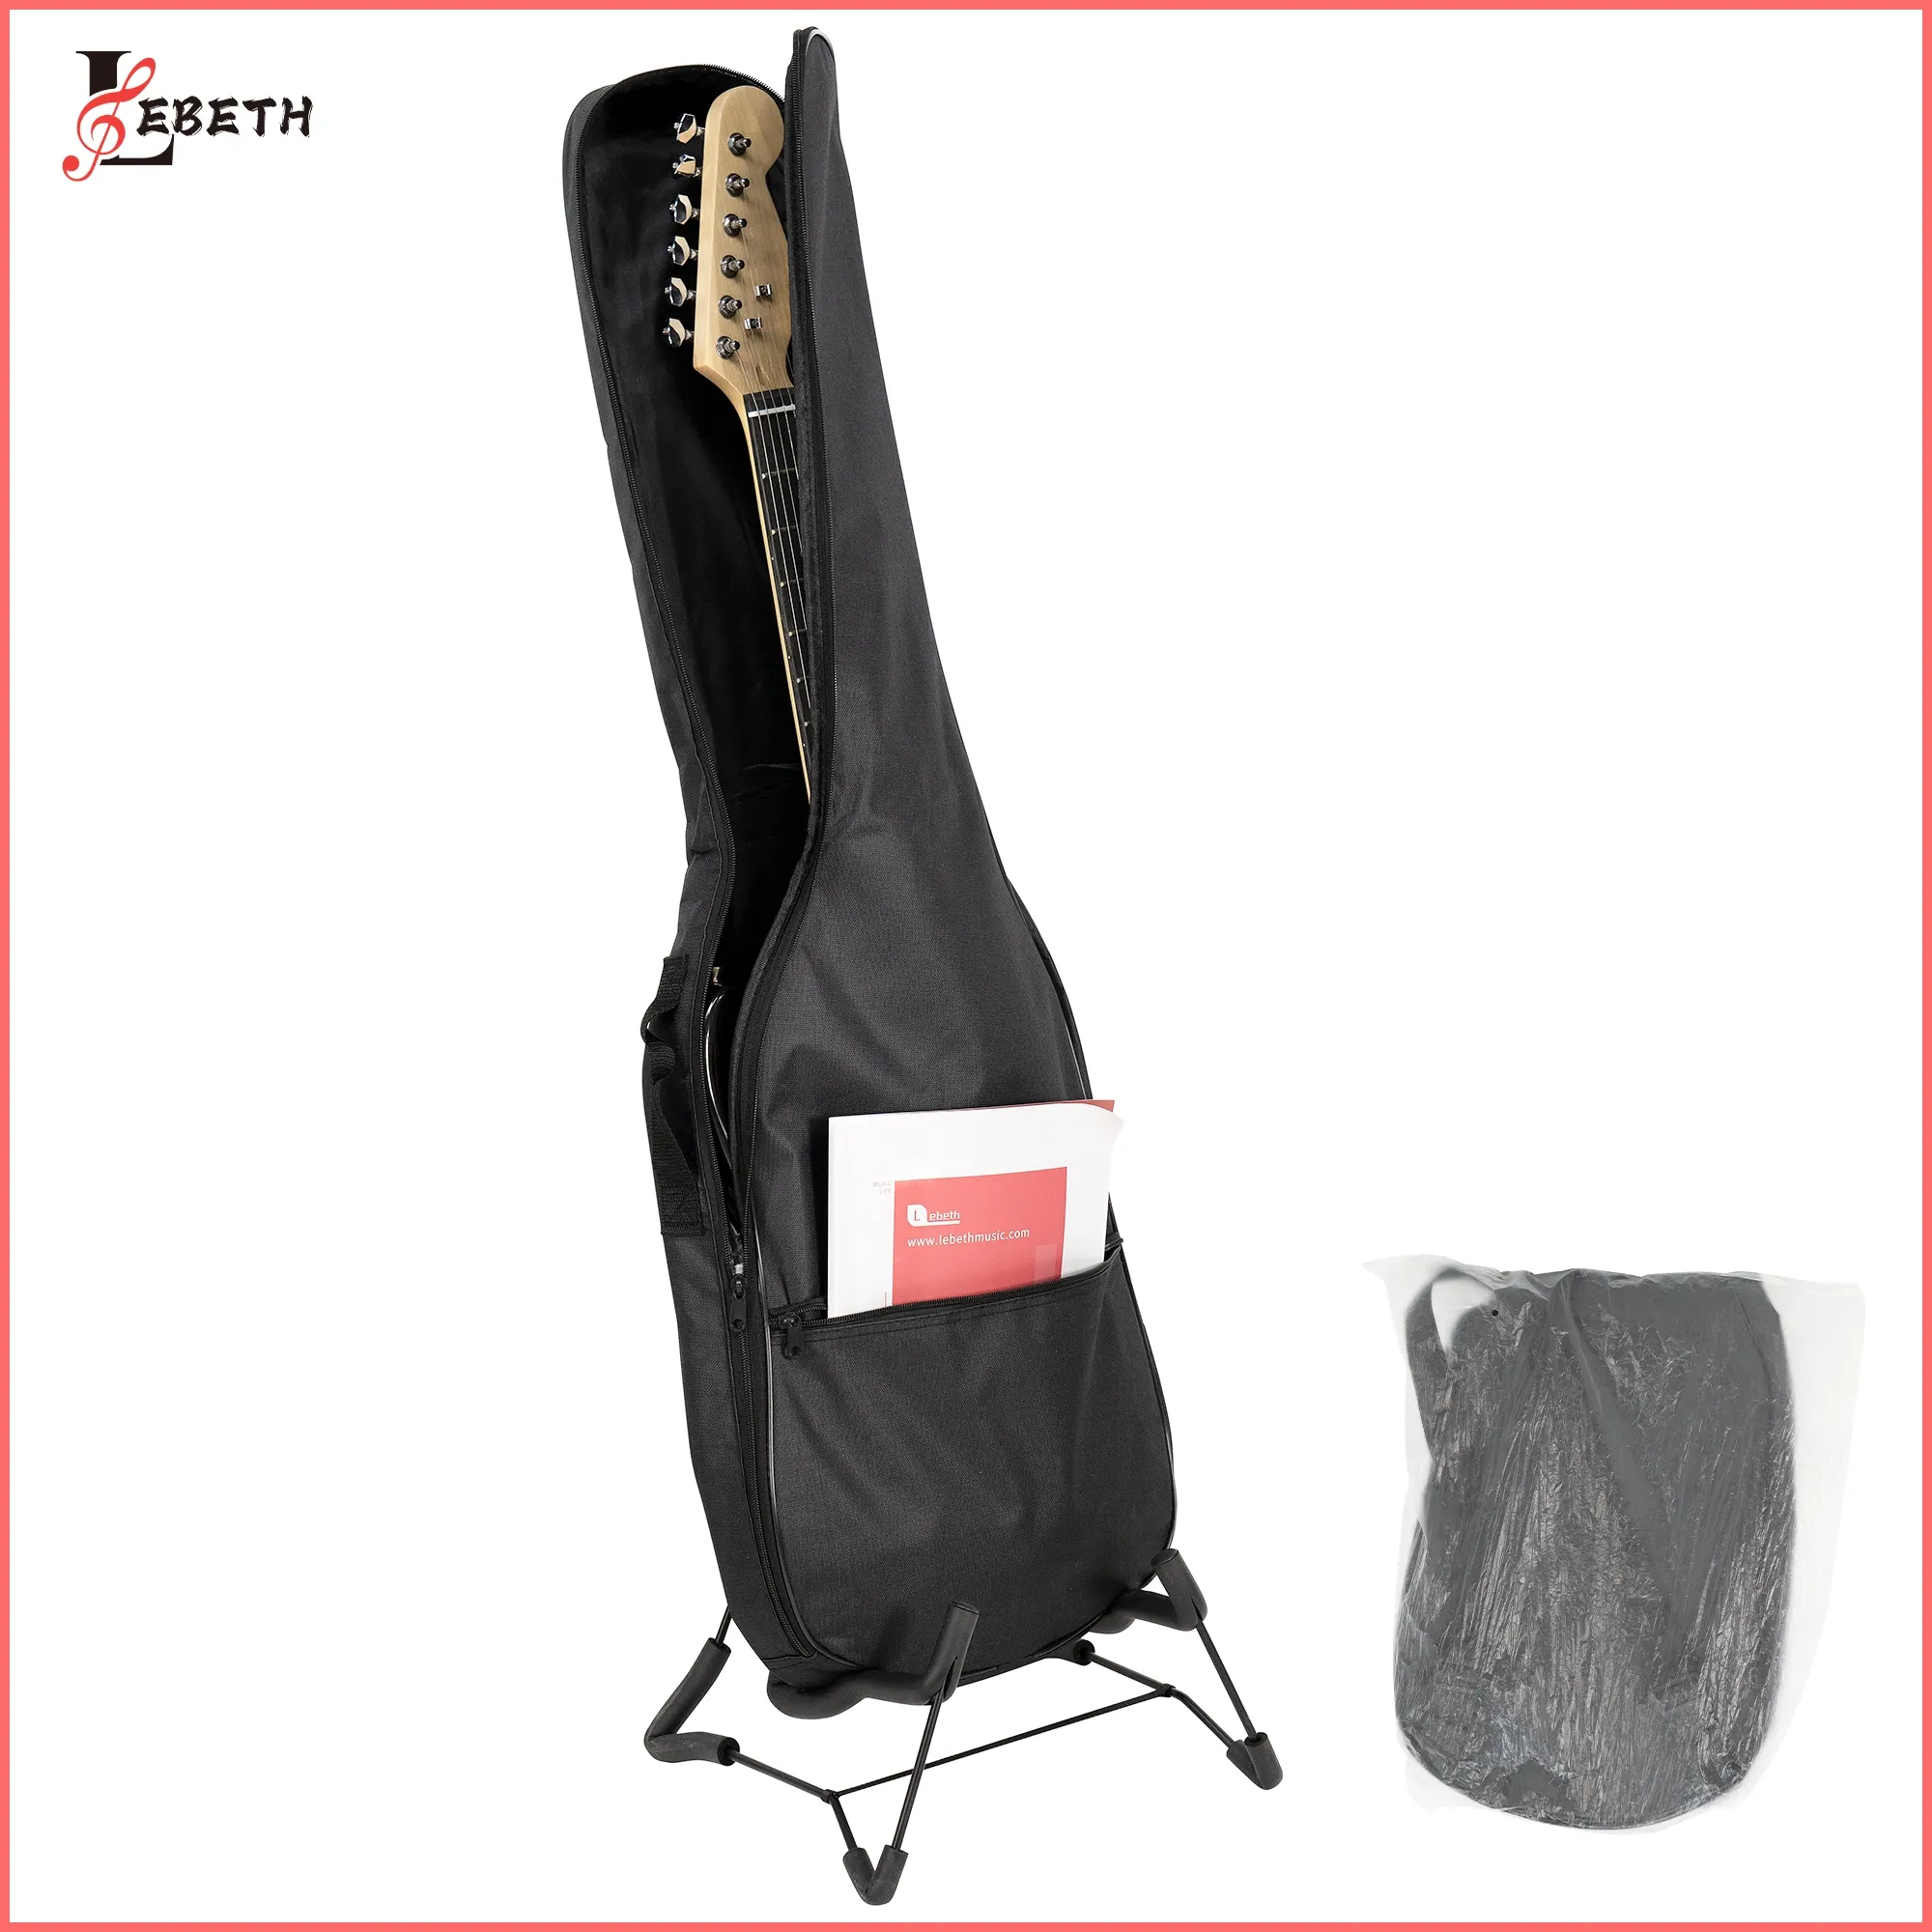 Lebeth GB-E3 39-Inch Electric Guitar Bag 600D Oxford Waterproof Black Soft Guitar Case Musical Instruments Accessory